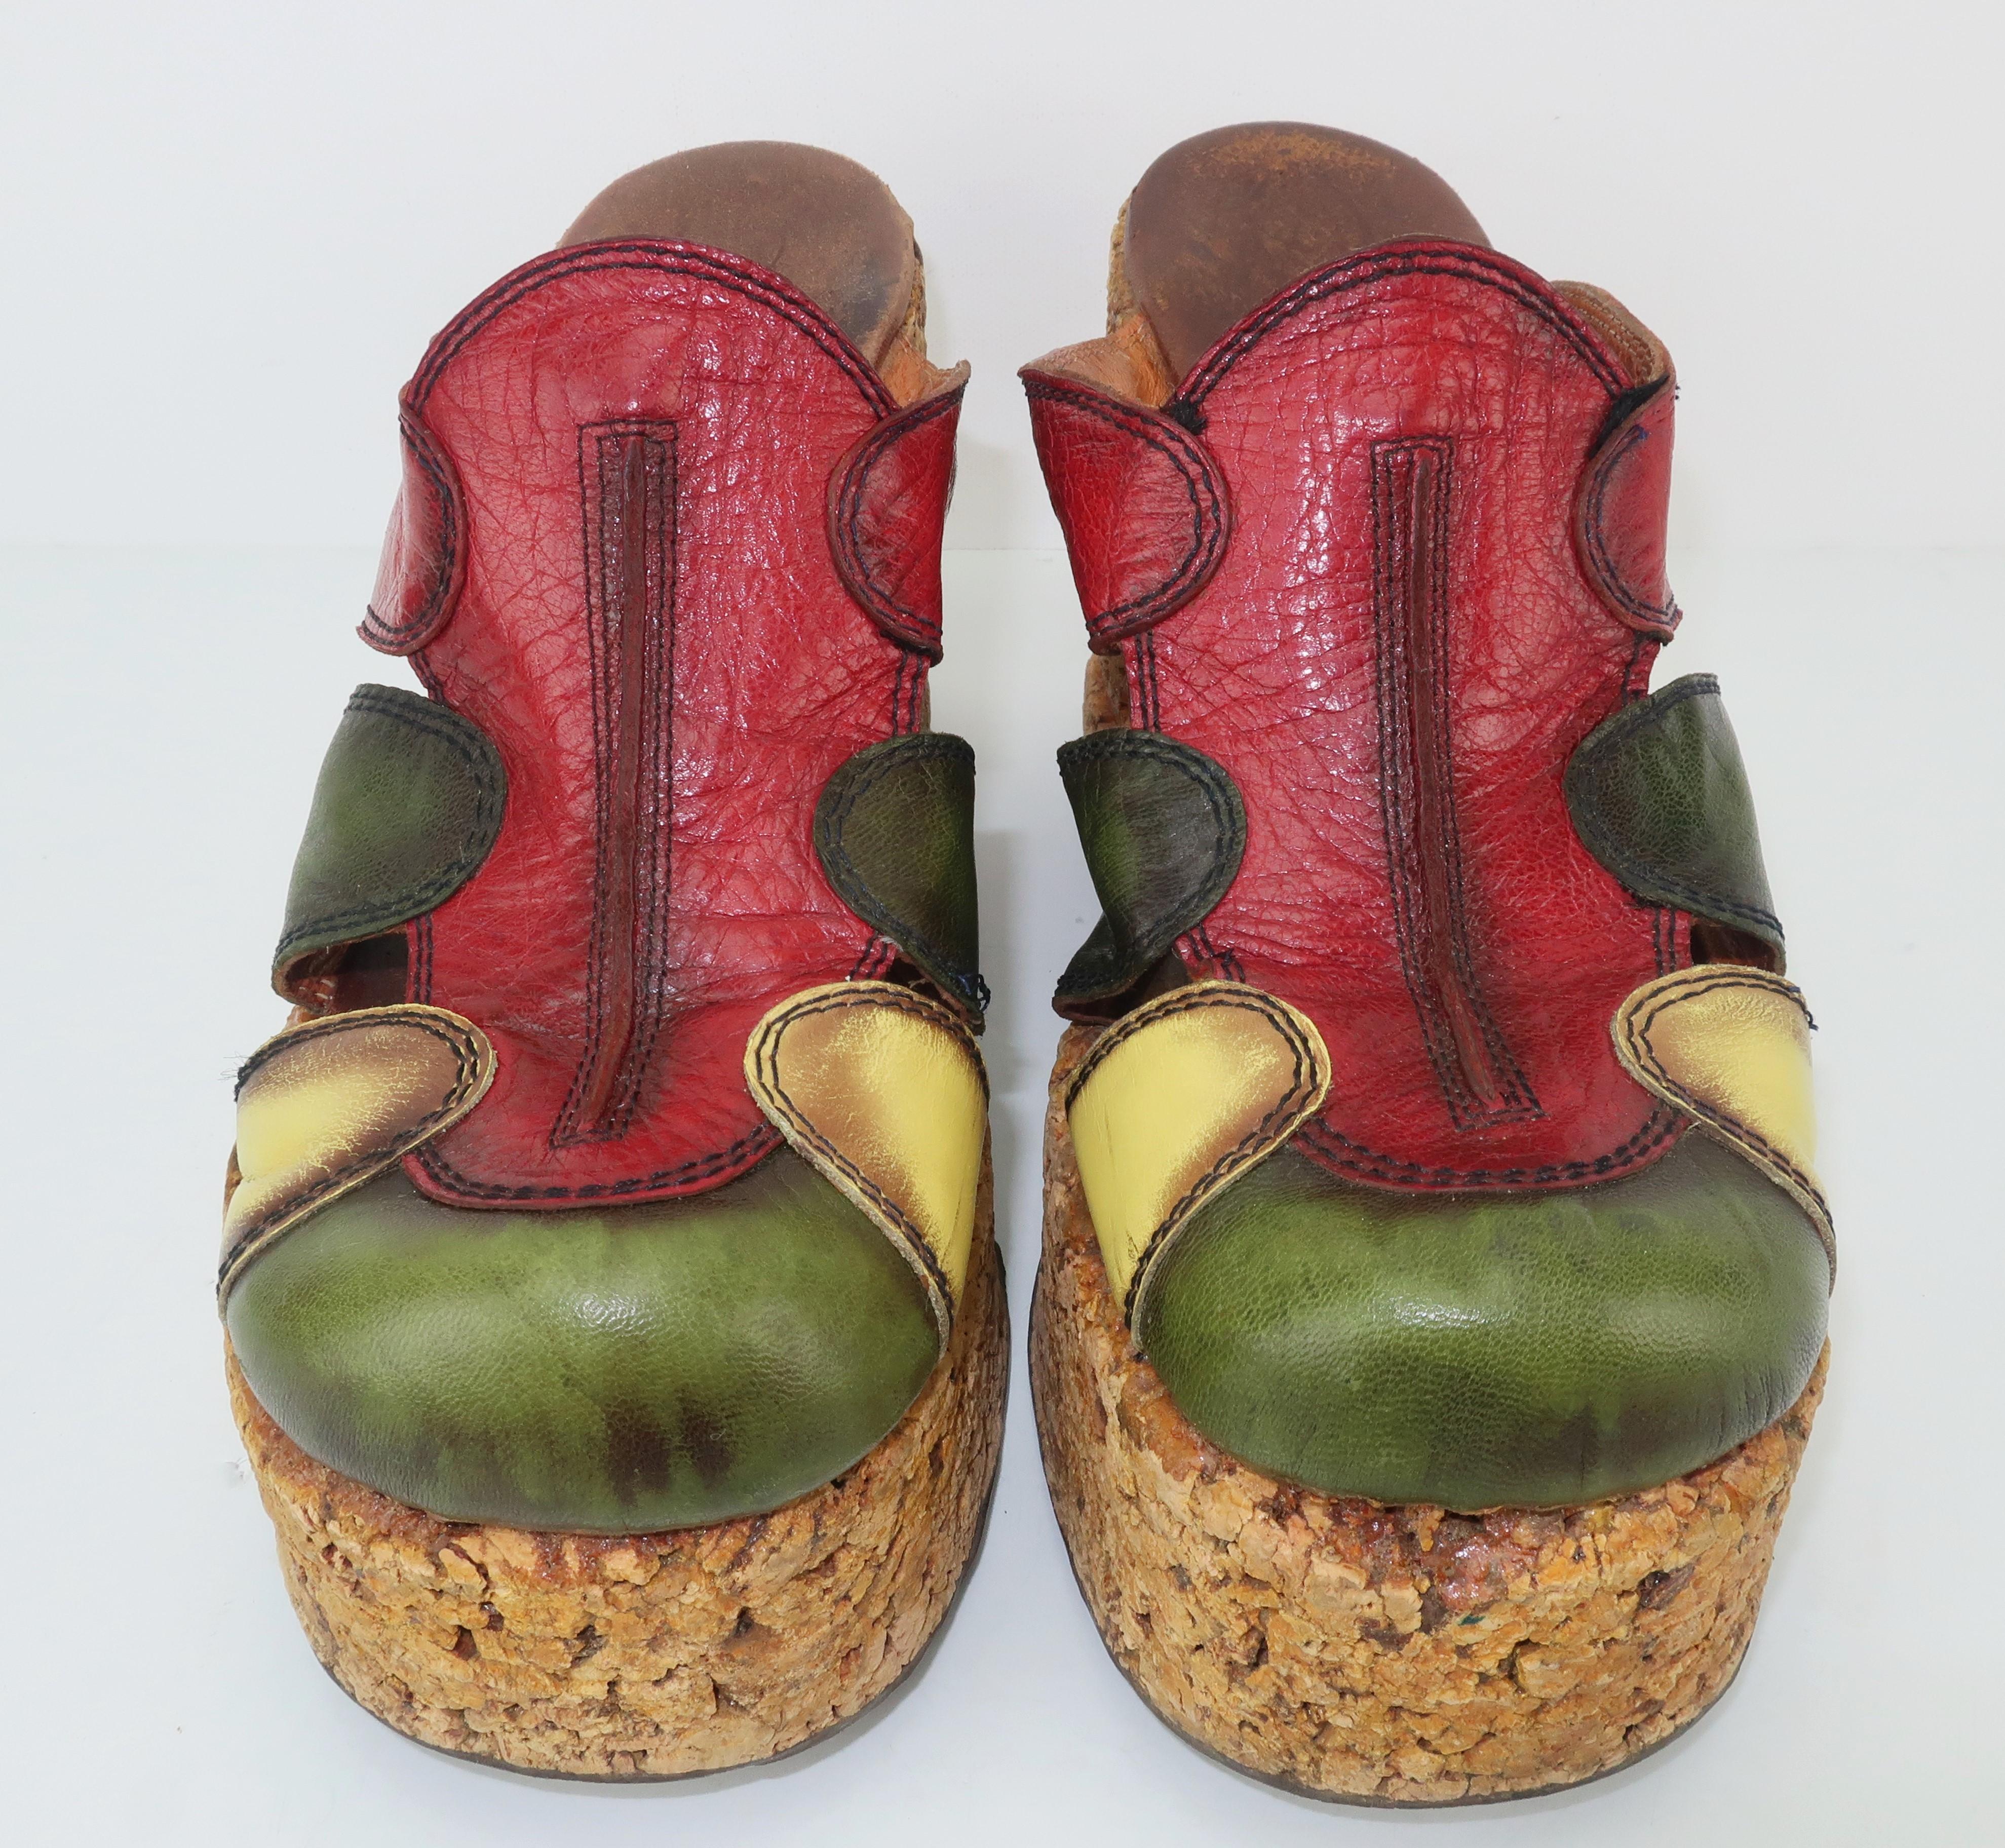 70s cork platform shoes